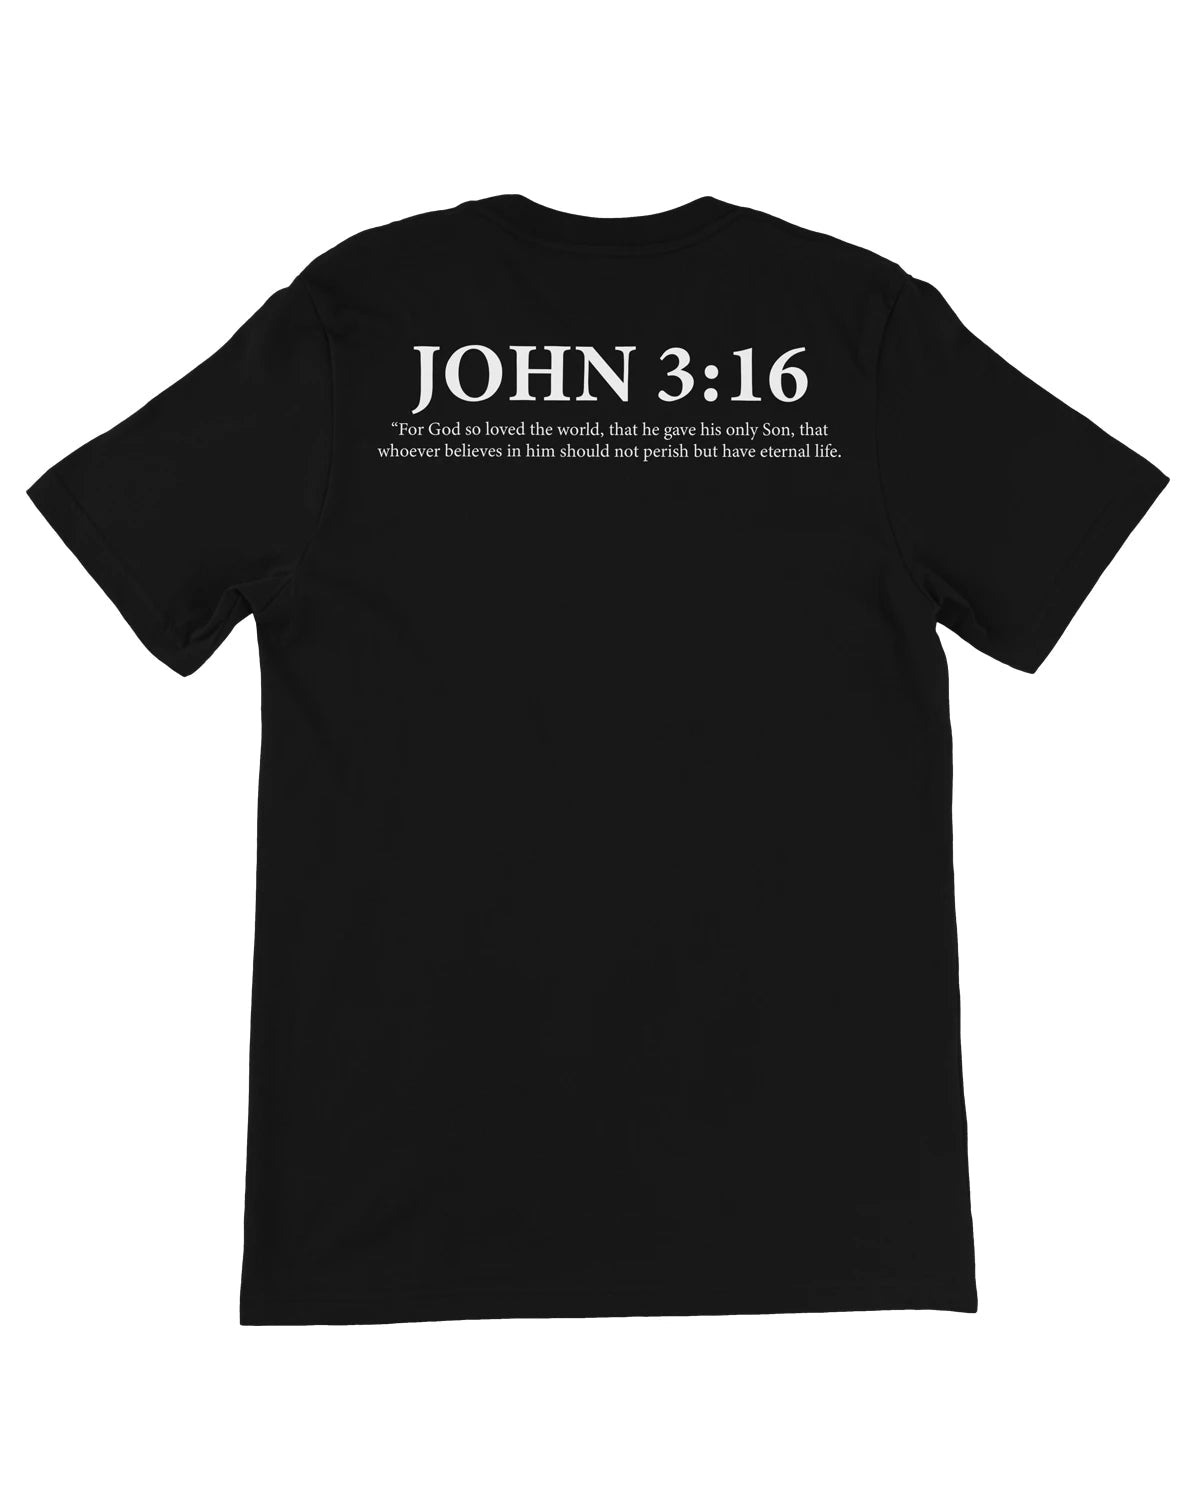 Black Jesus Saves Unisex T-Shirt - Walk In Faith Clothing